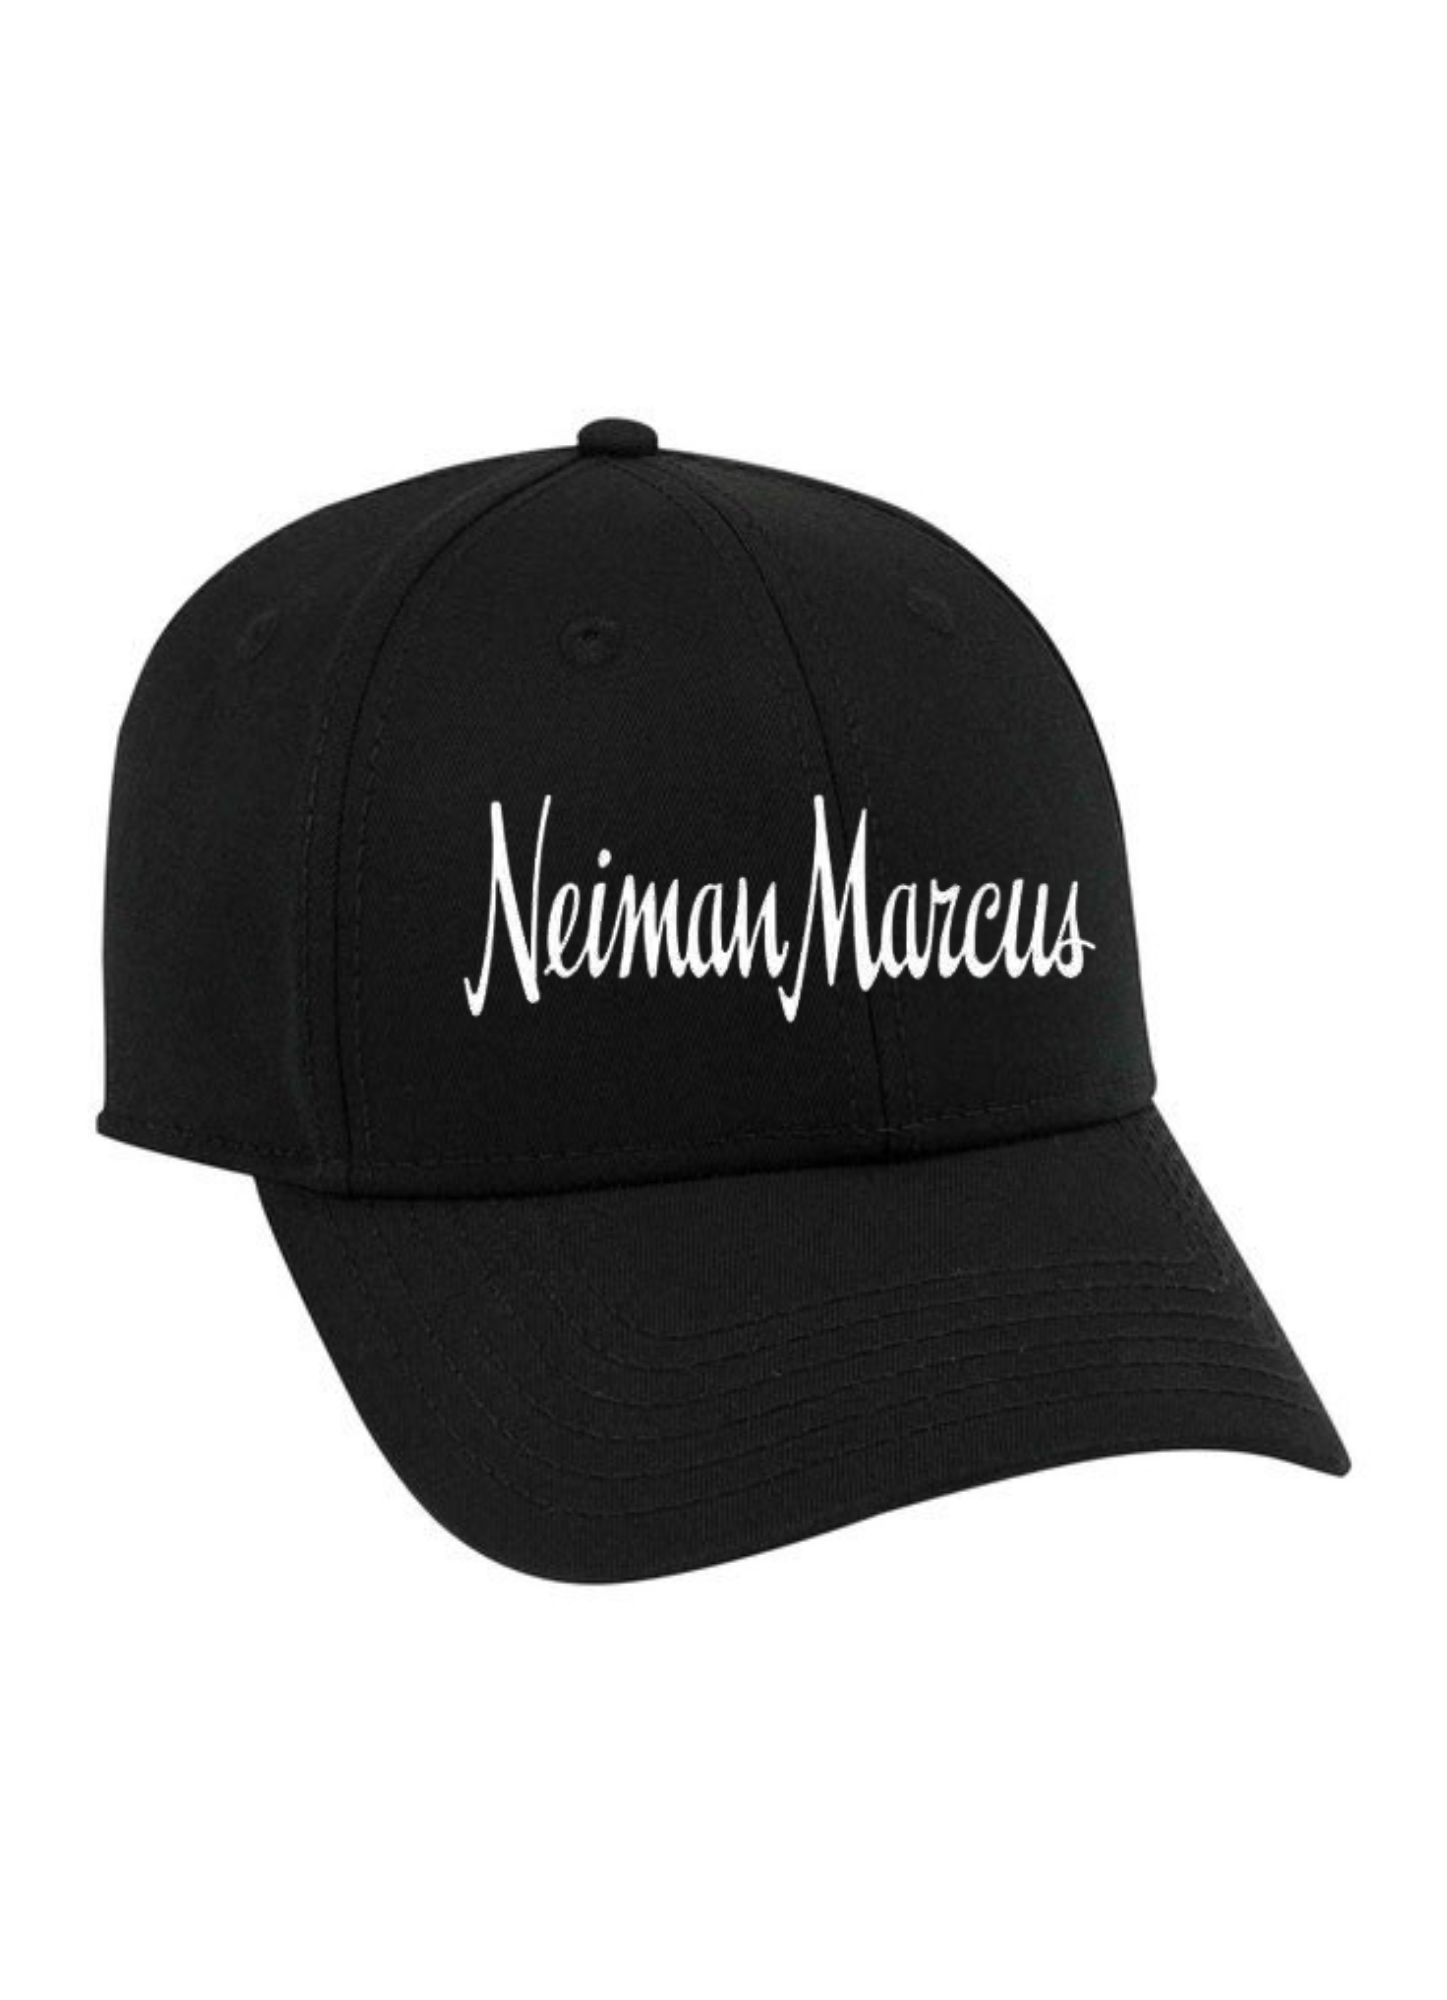 Neiman Marcus Logo Png